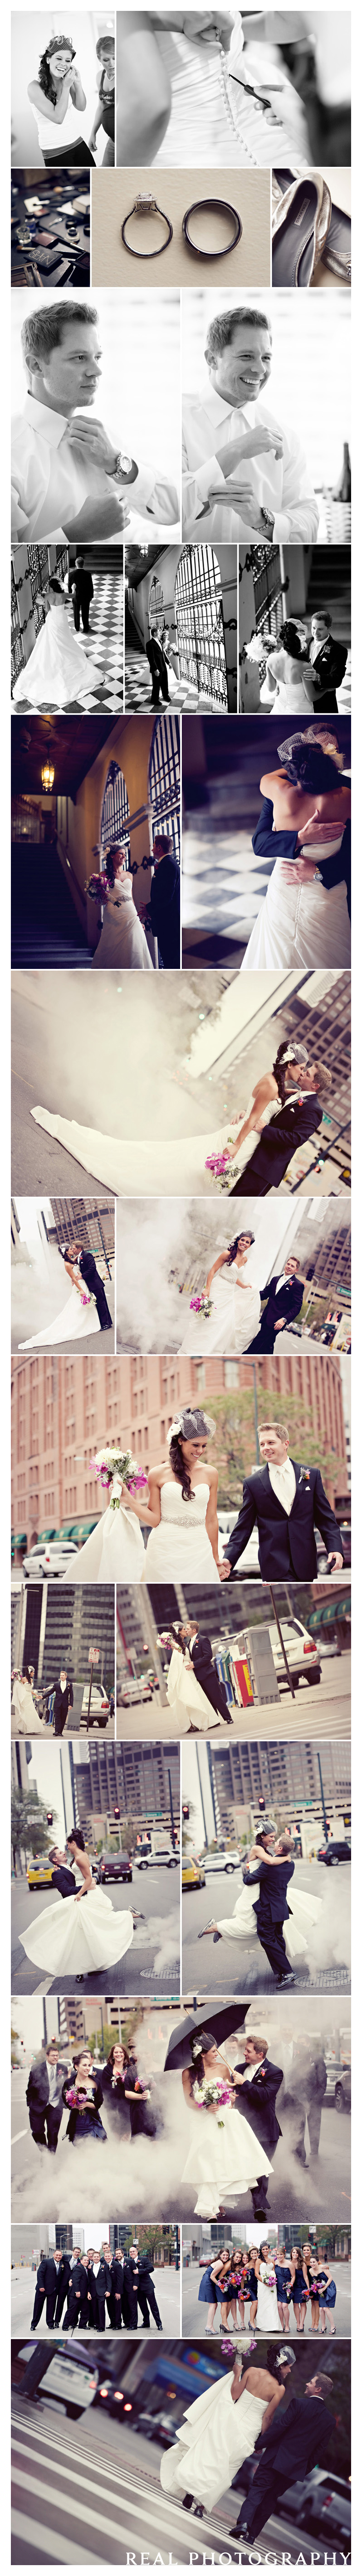 wedding photos downtown denver portraits